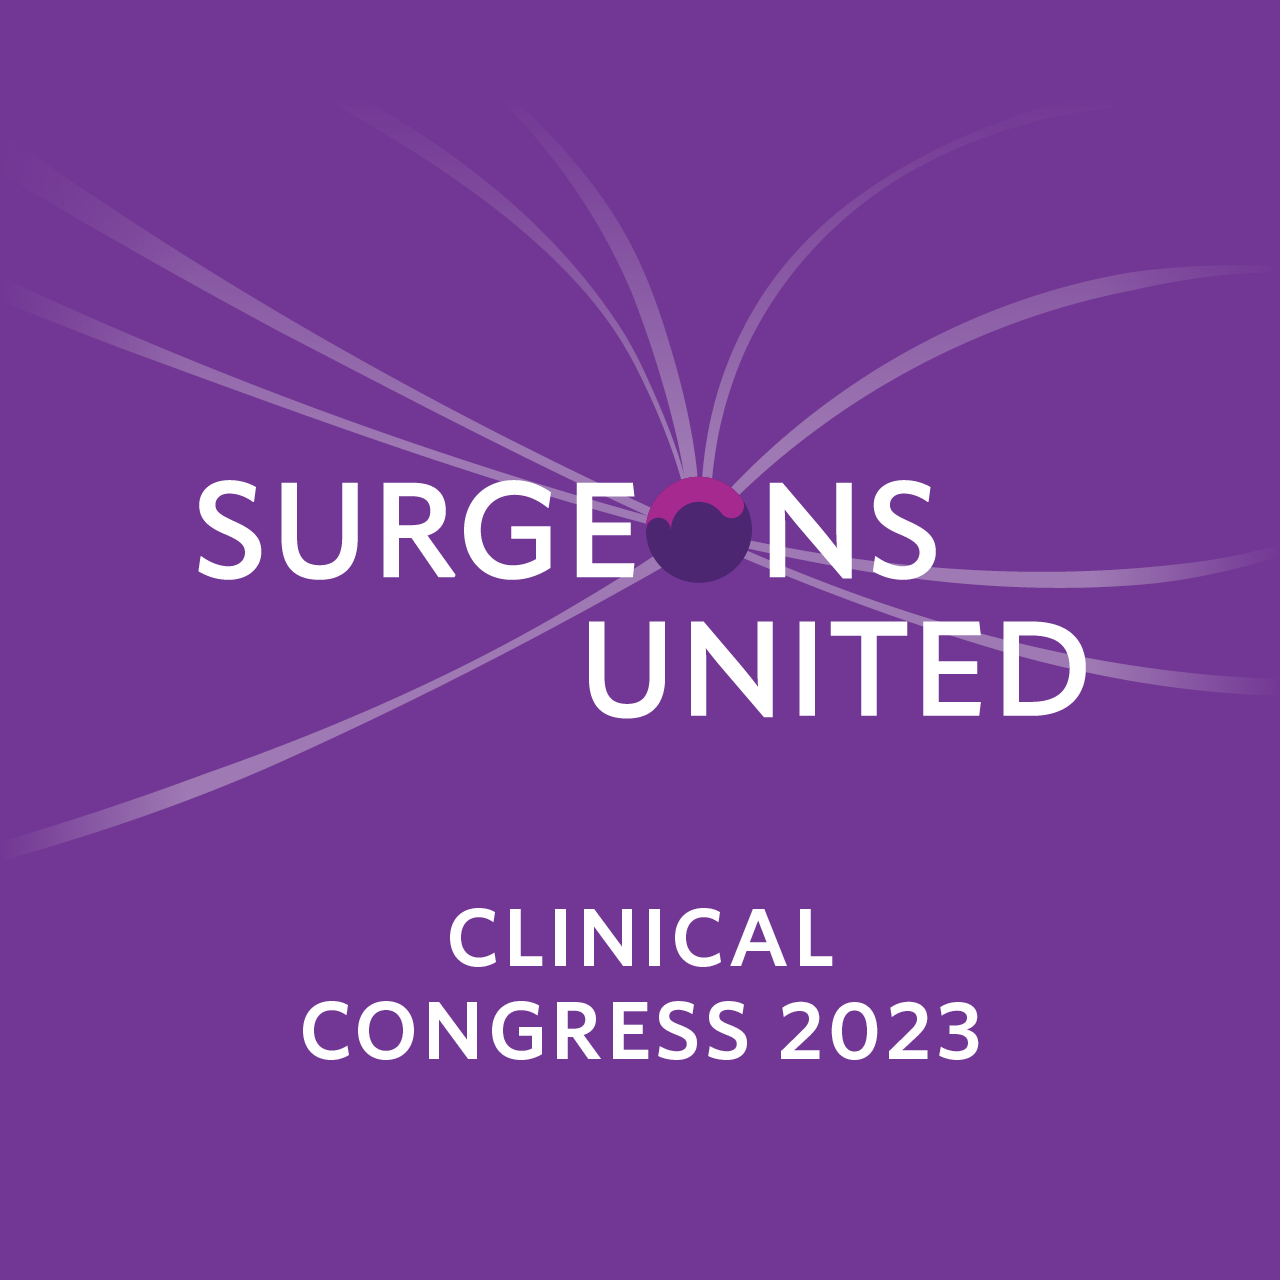 Clinical Congress 2023